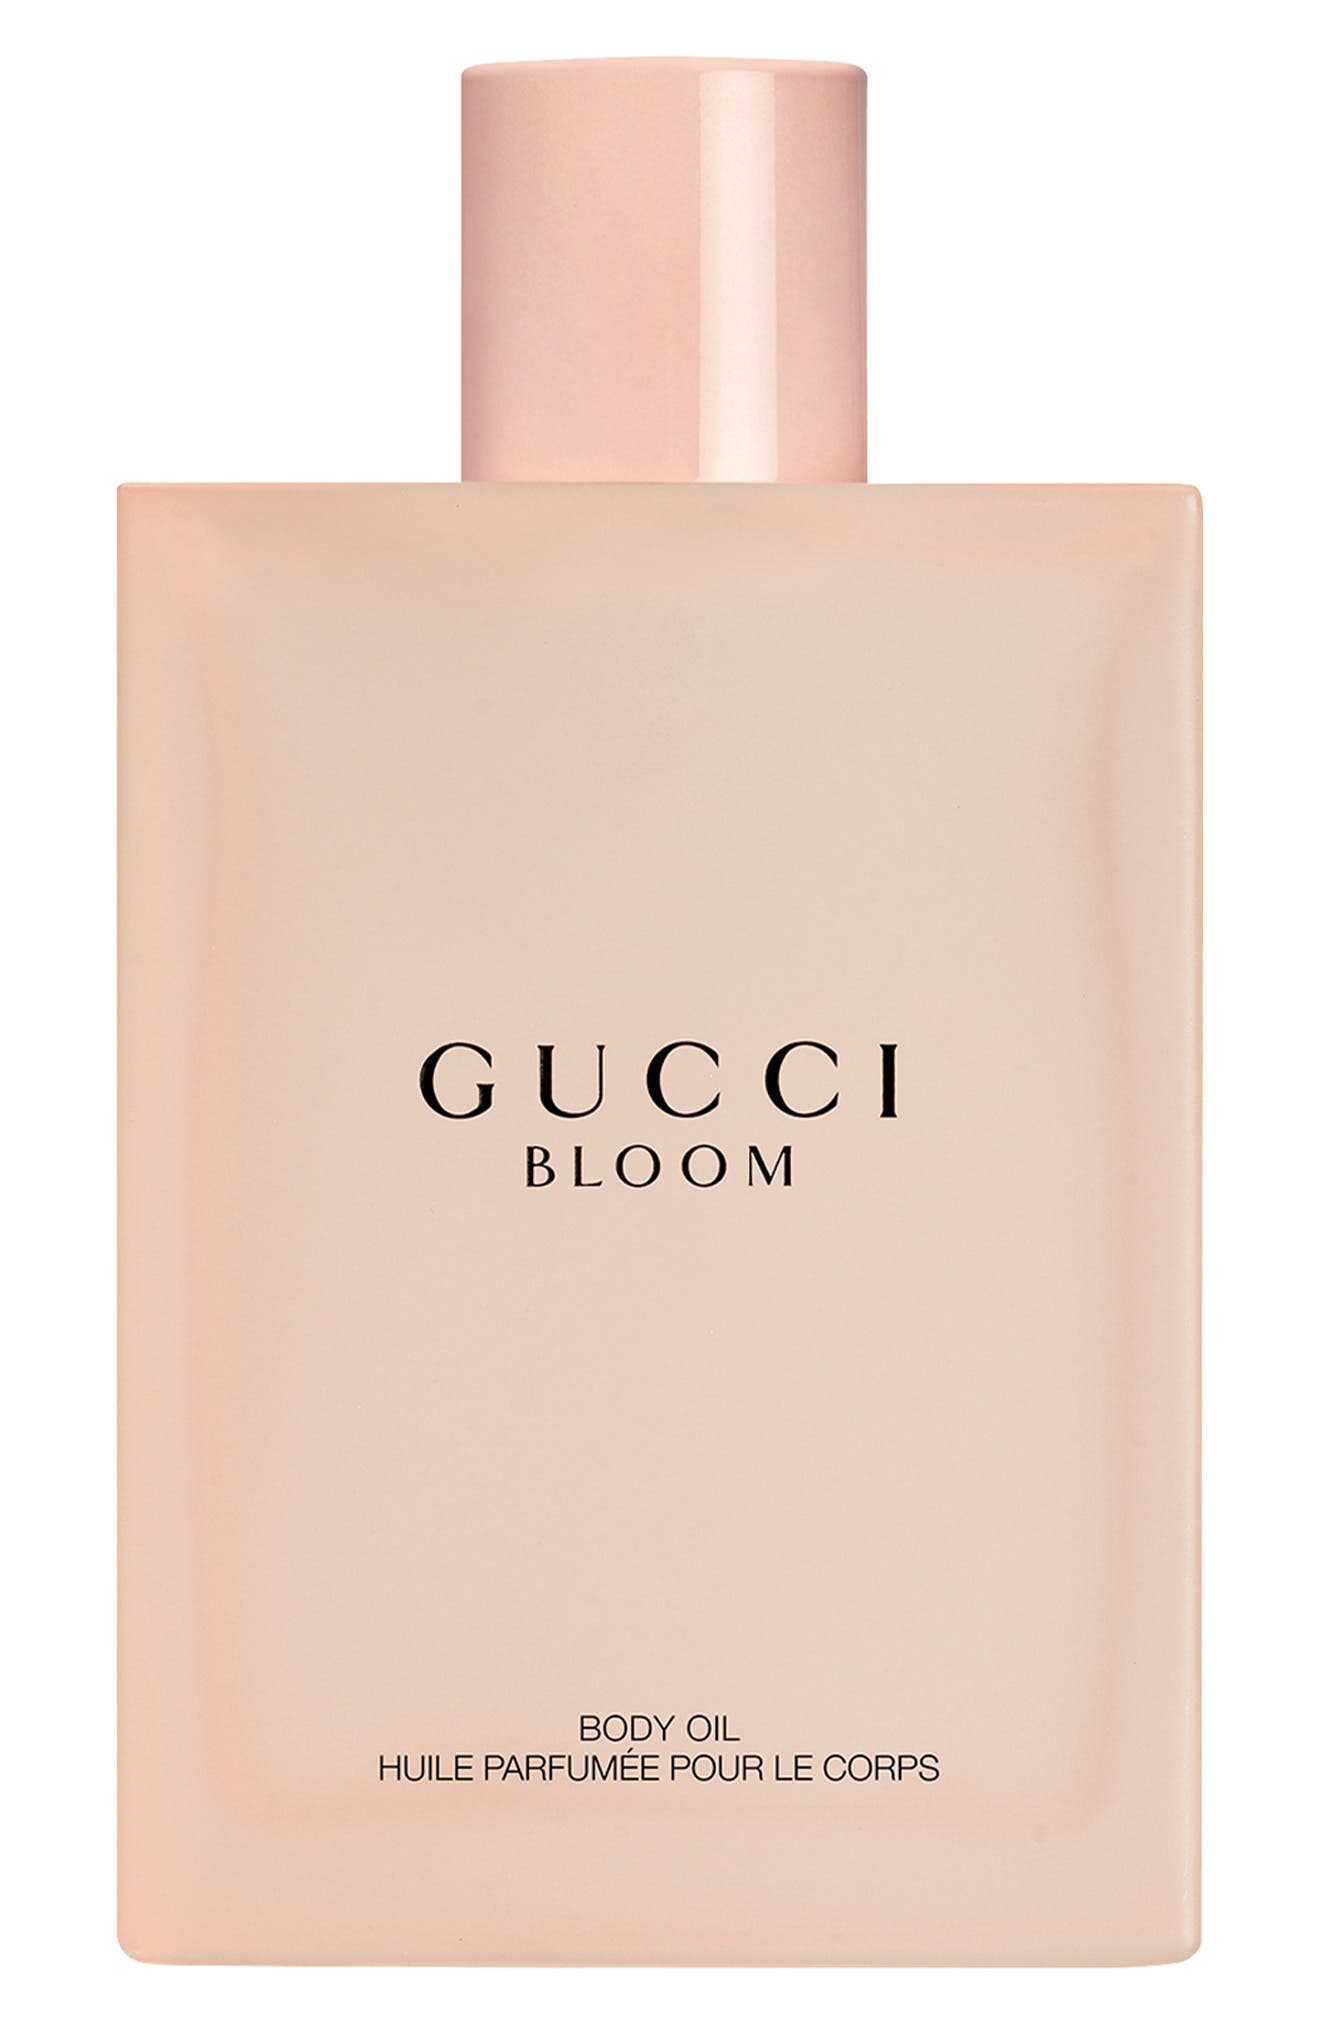 gucci perfume and lotion set